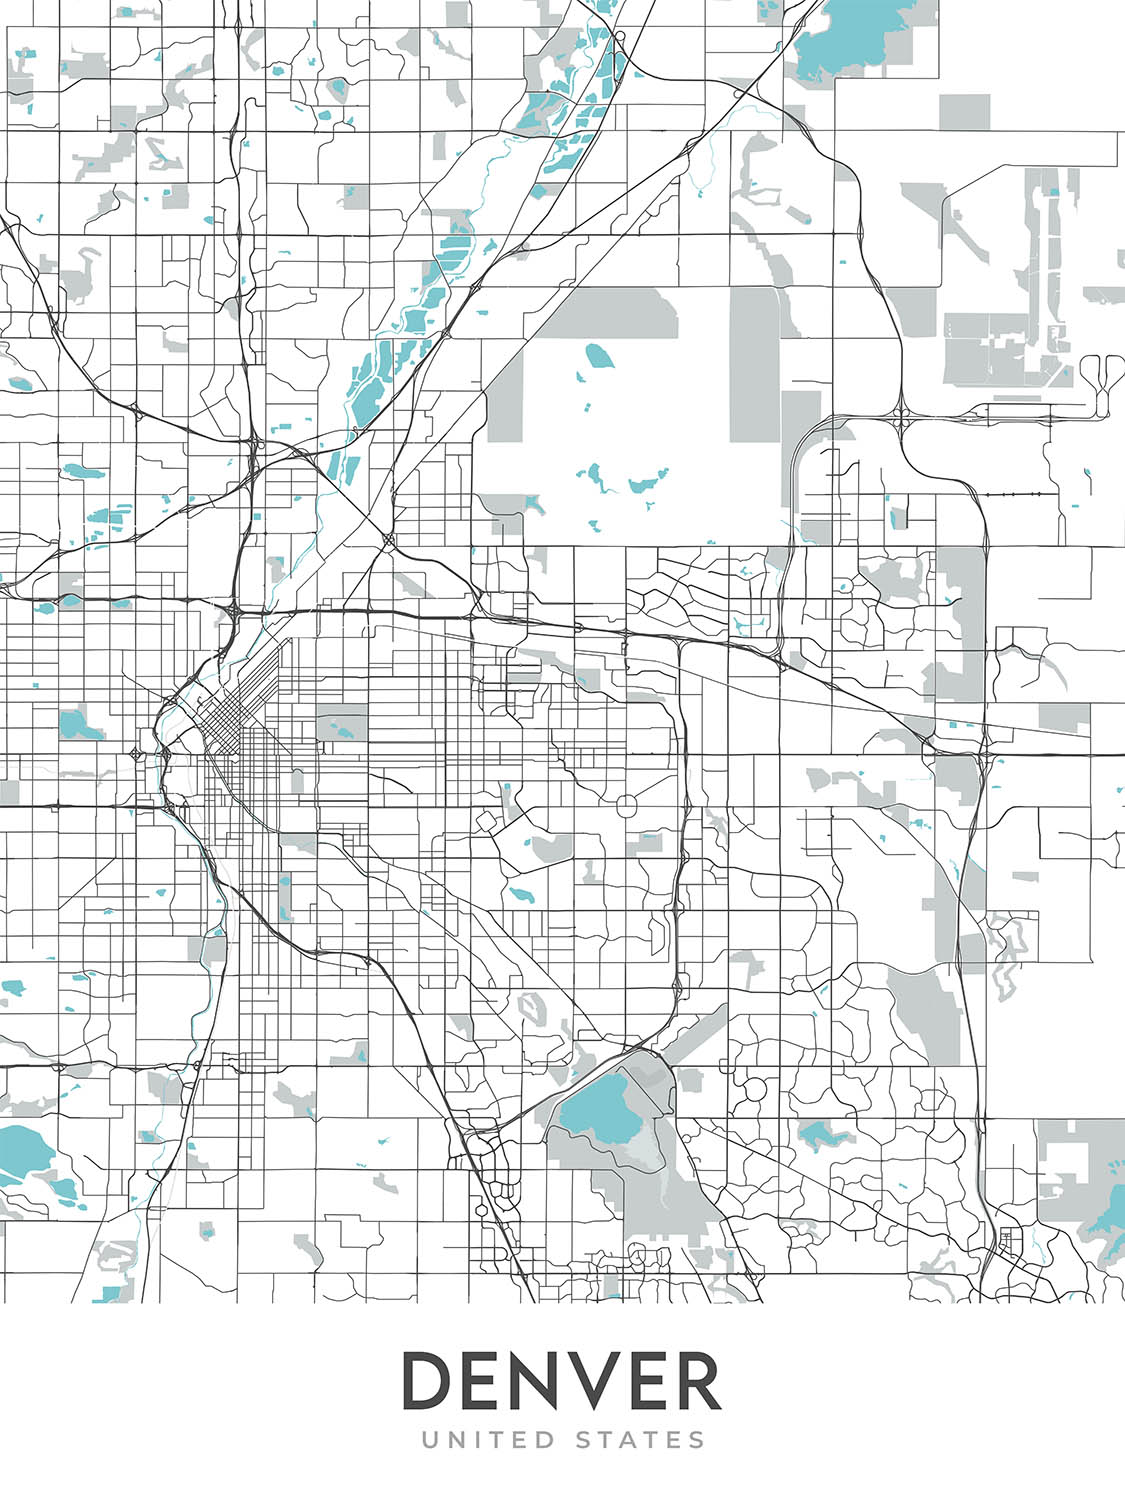 Plan de la ville moderne de Denver, Colorado : Red Rocks, City Park, Larimer Sq, Highlands, Capitol Hill